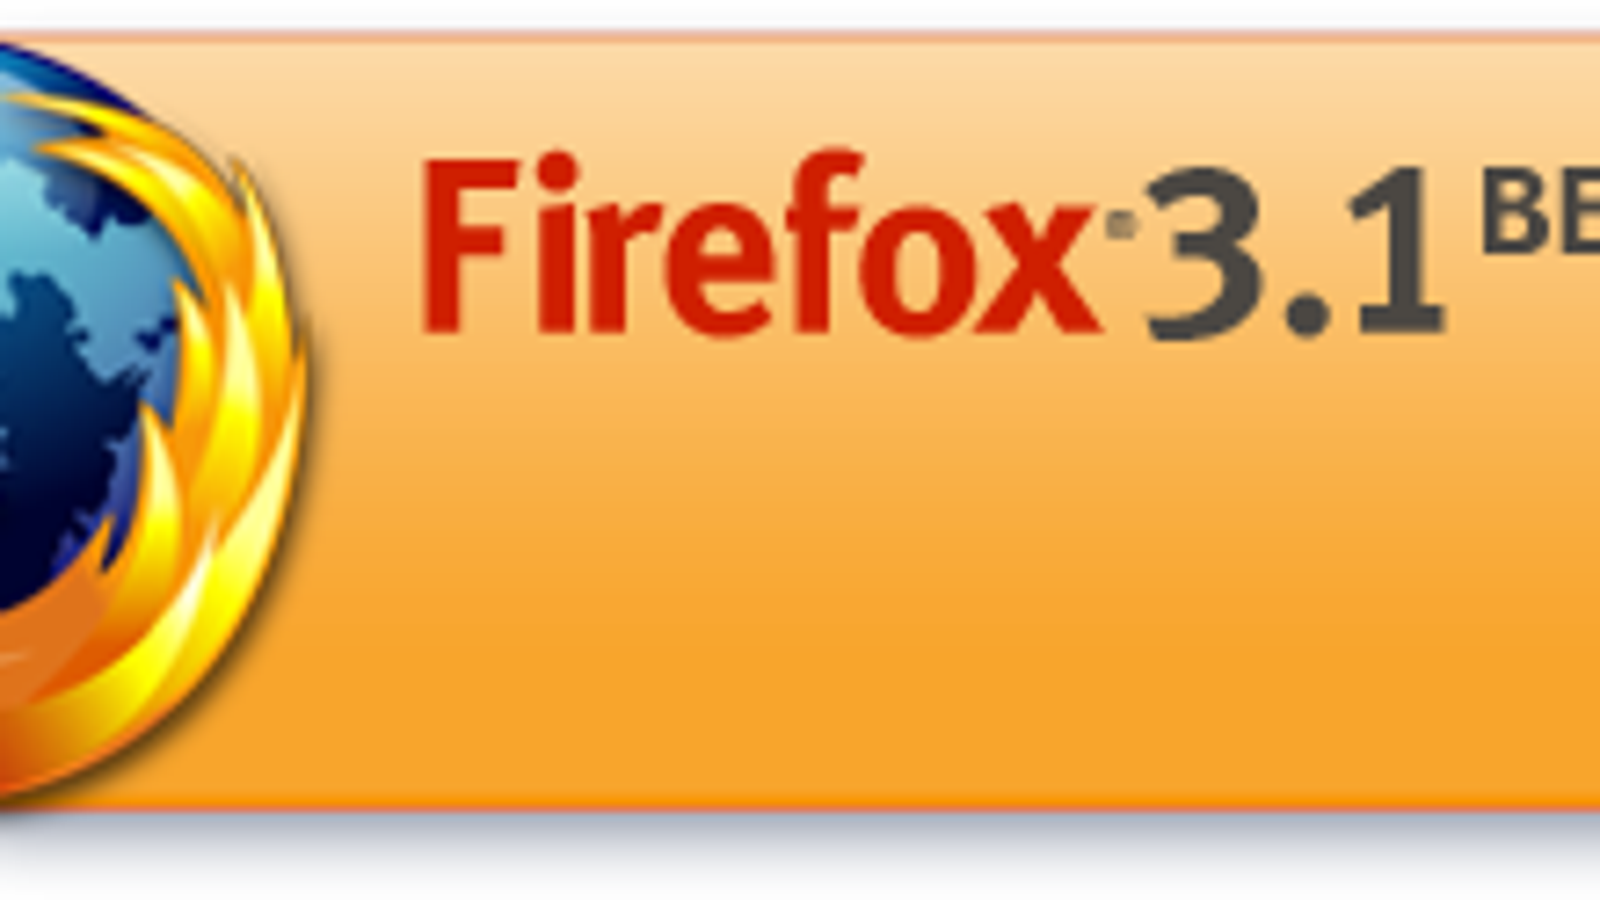 1password firefox beta